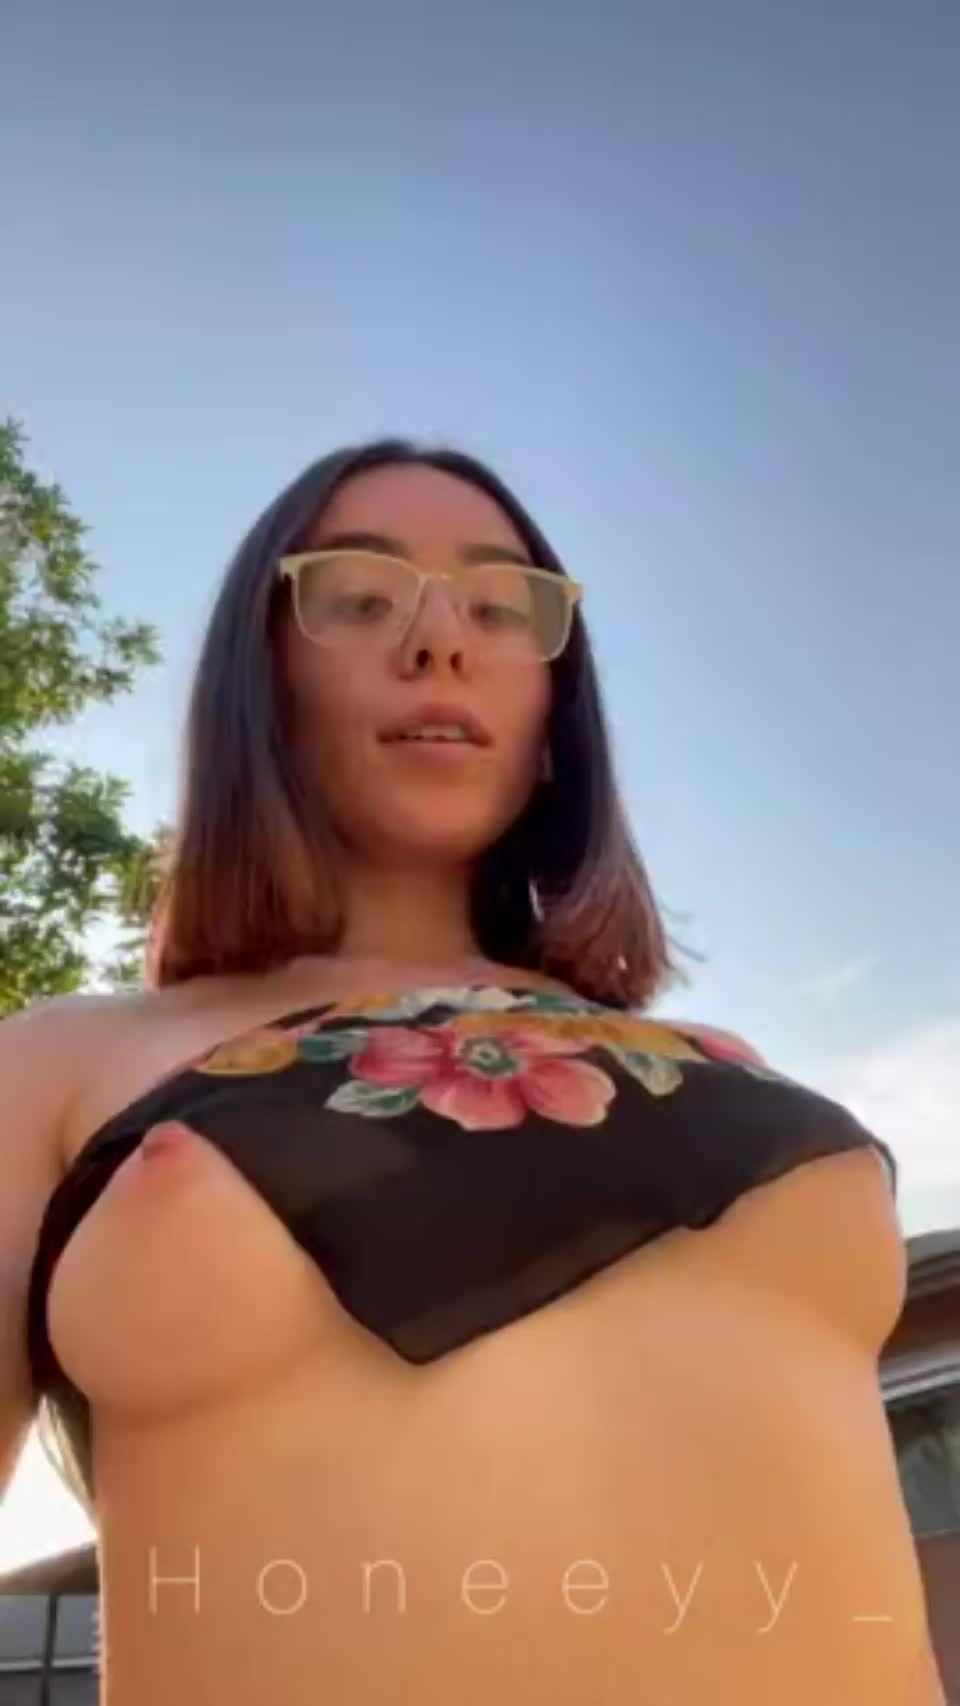 xhoneeyy cute glasses and tits